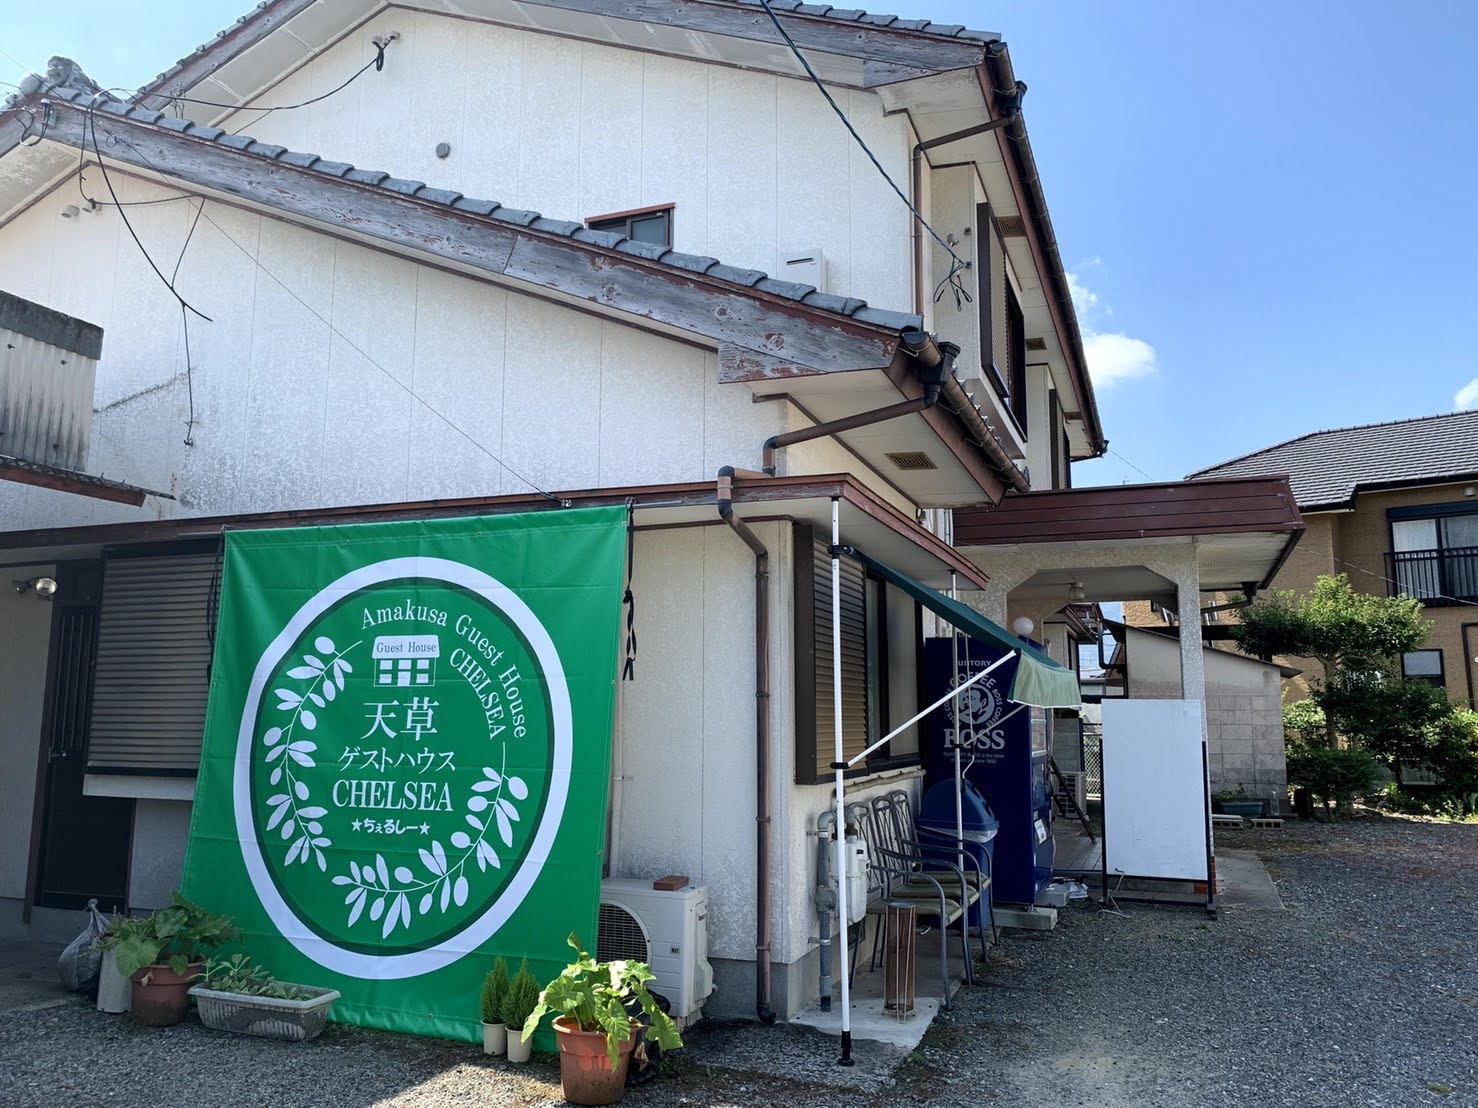 Amakusa Guest House Chelsea